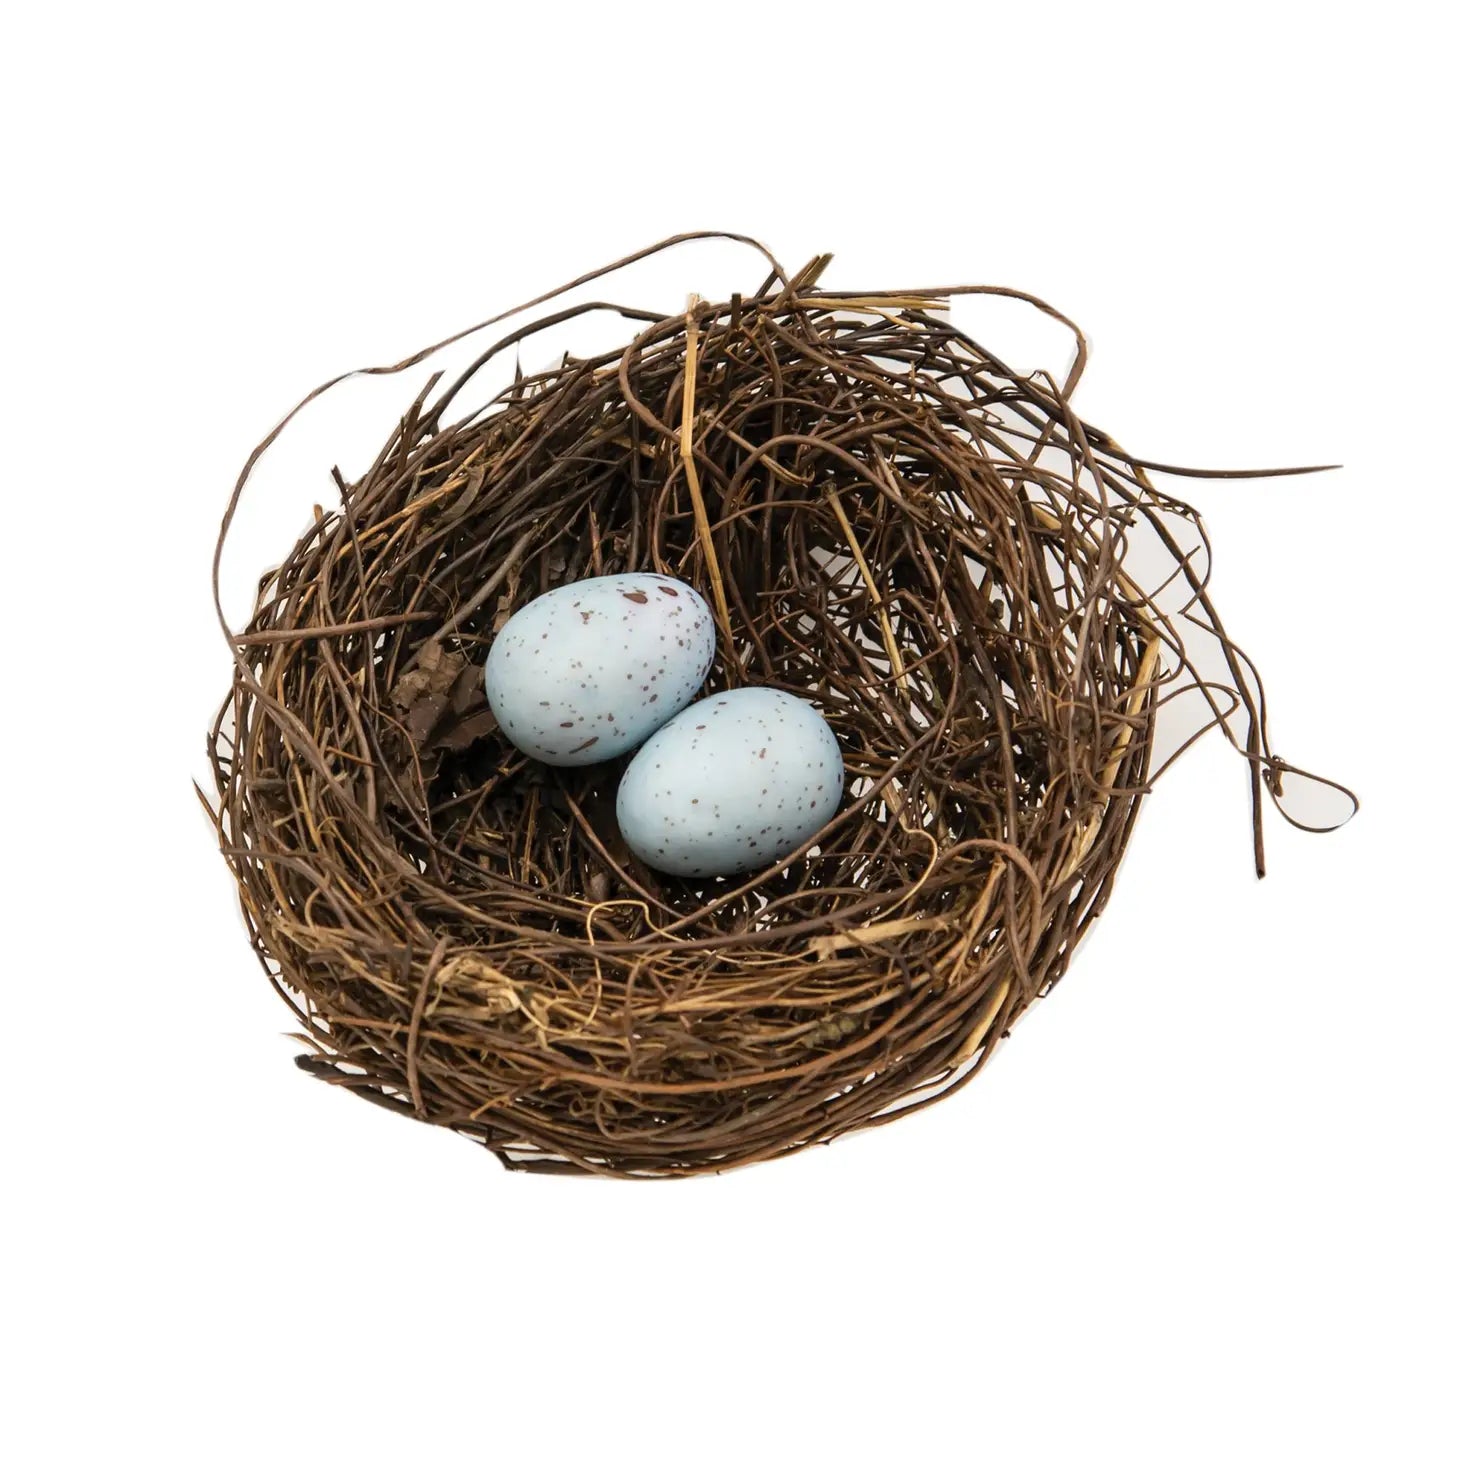 Angelvine Bird Nest With Eggs, 4.5"